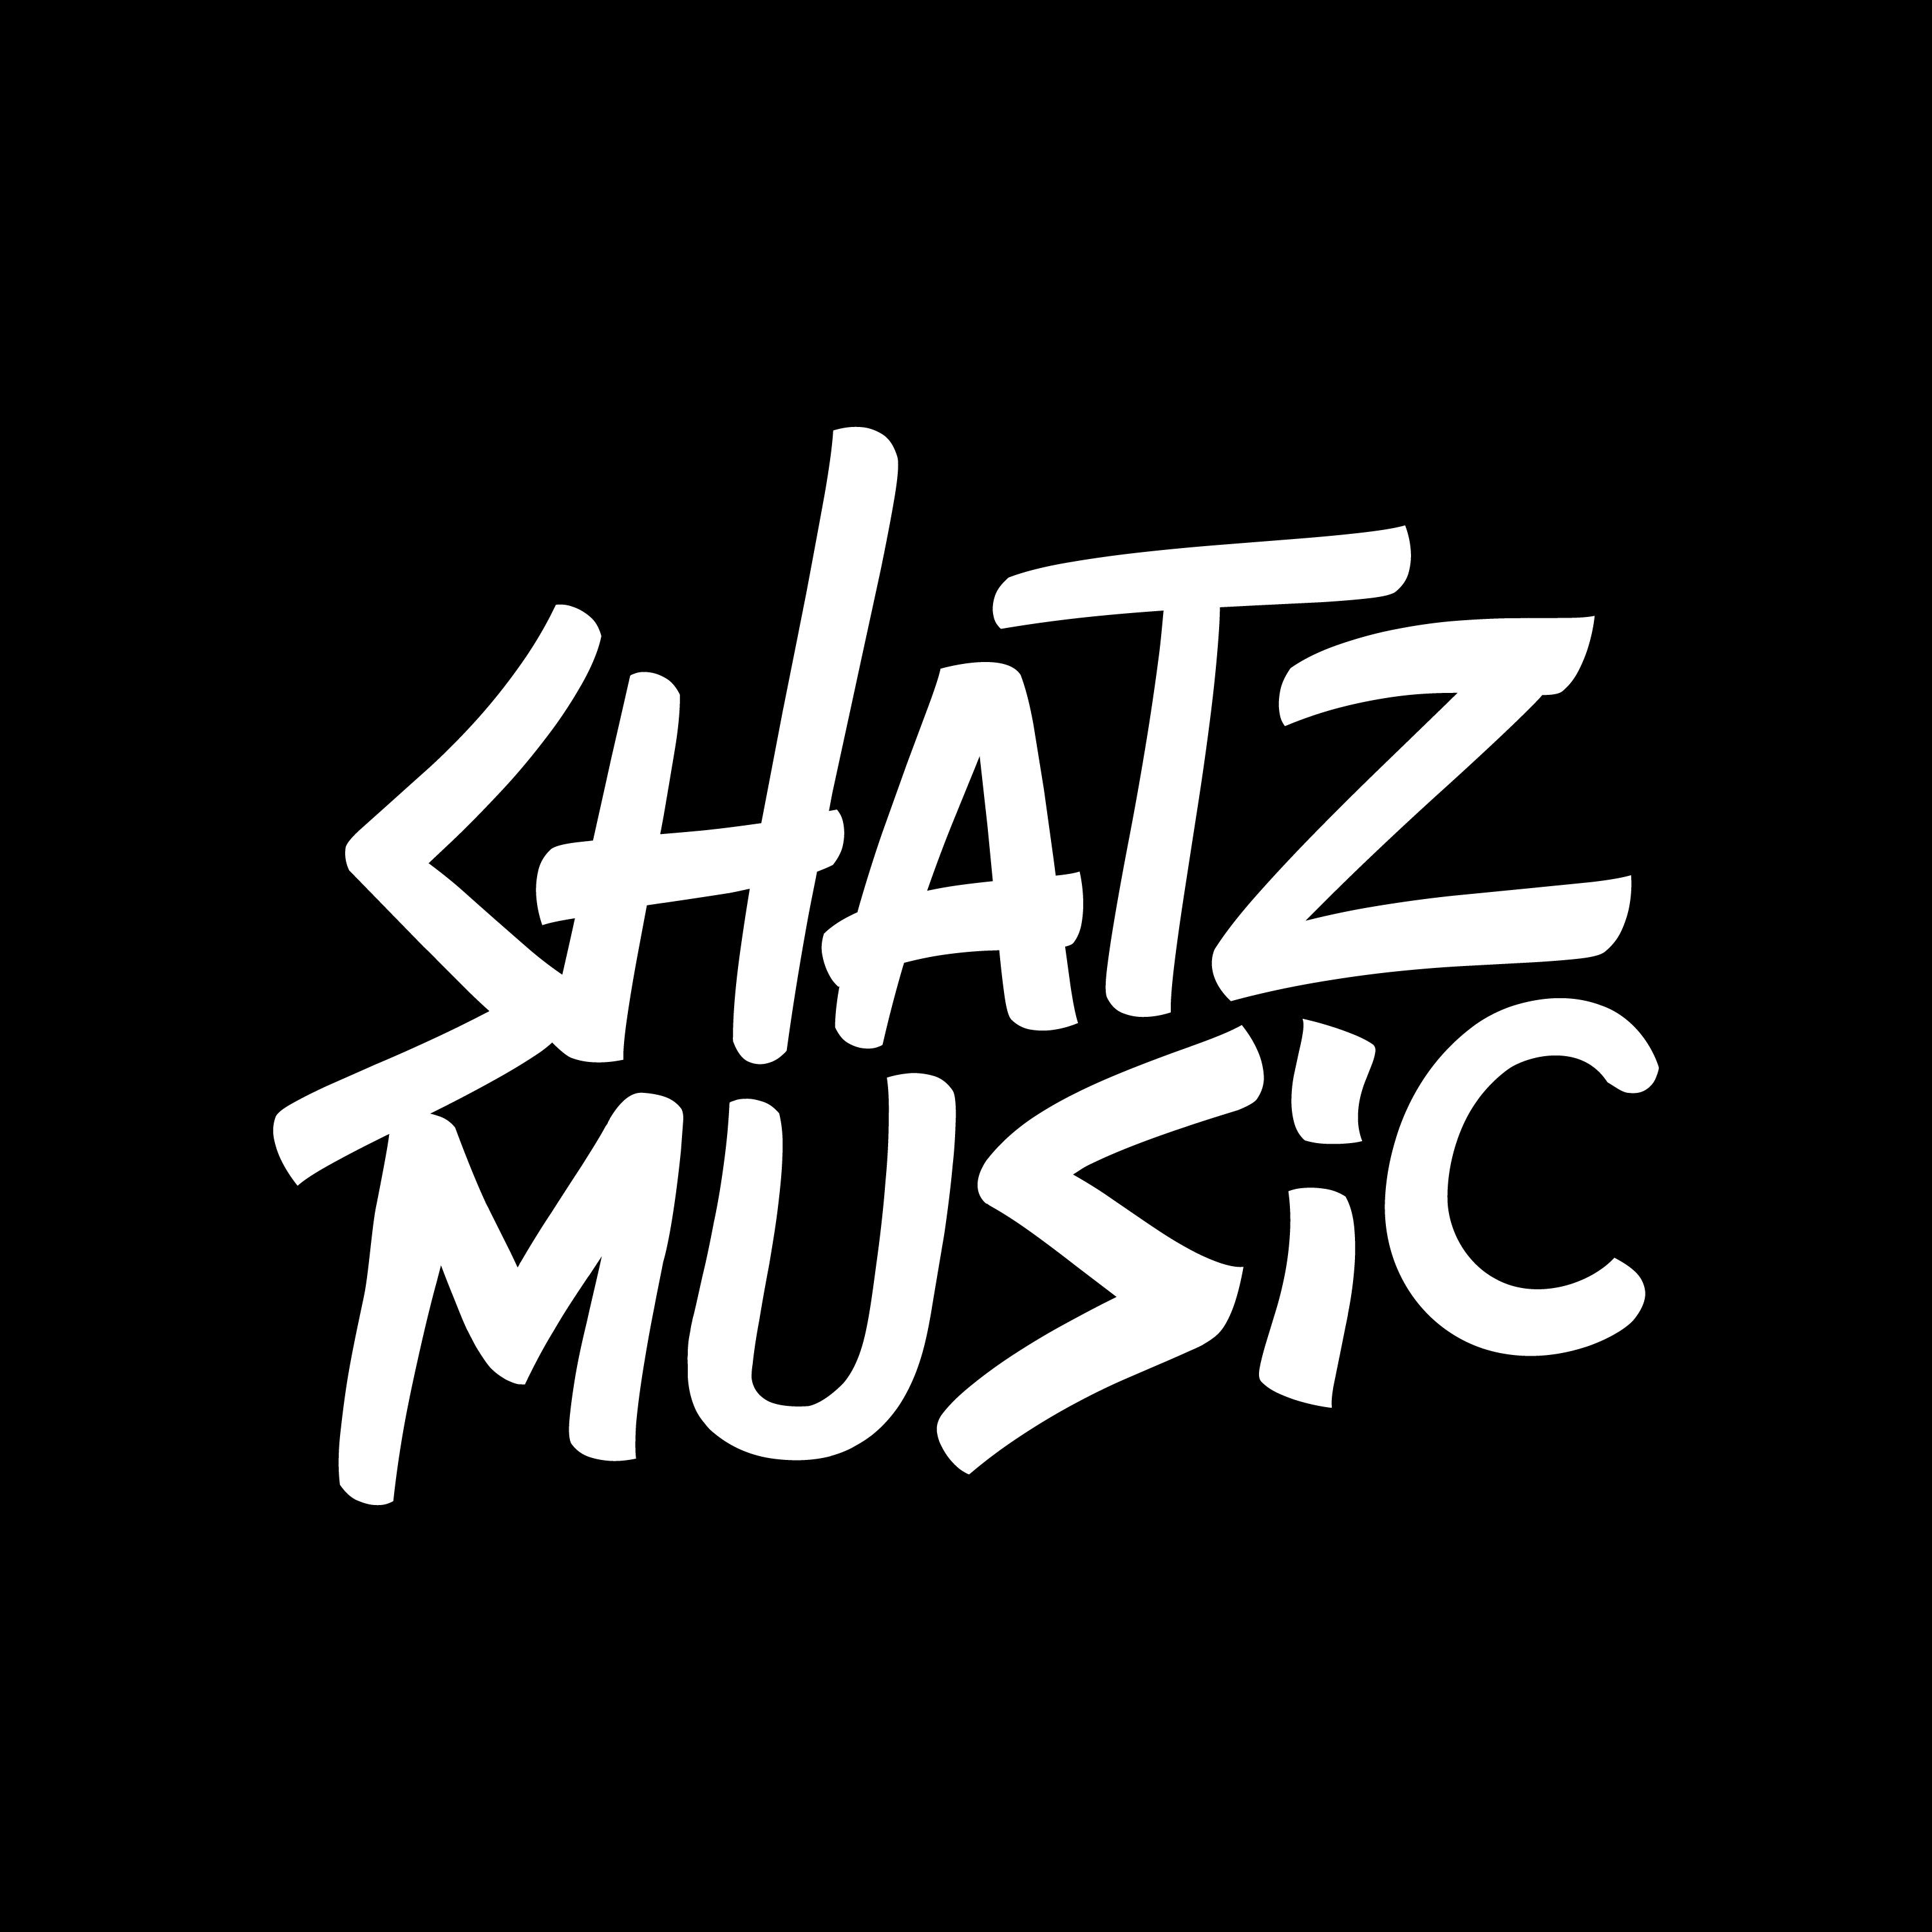 Shatz Music Logo